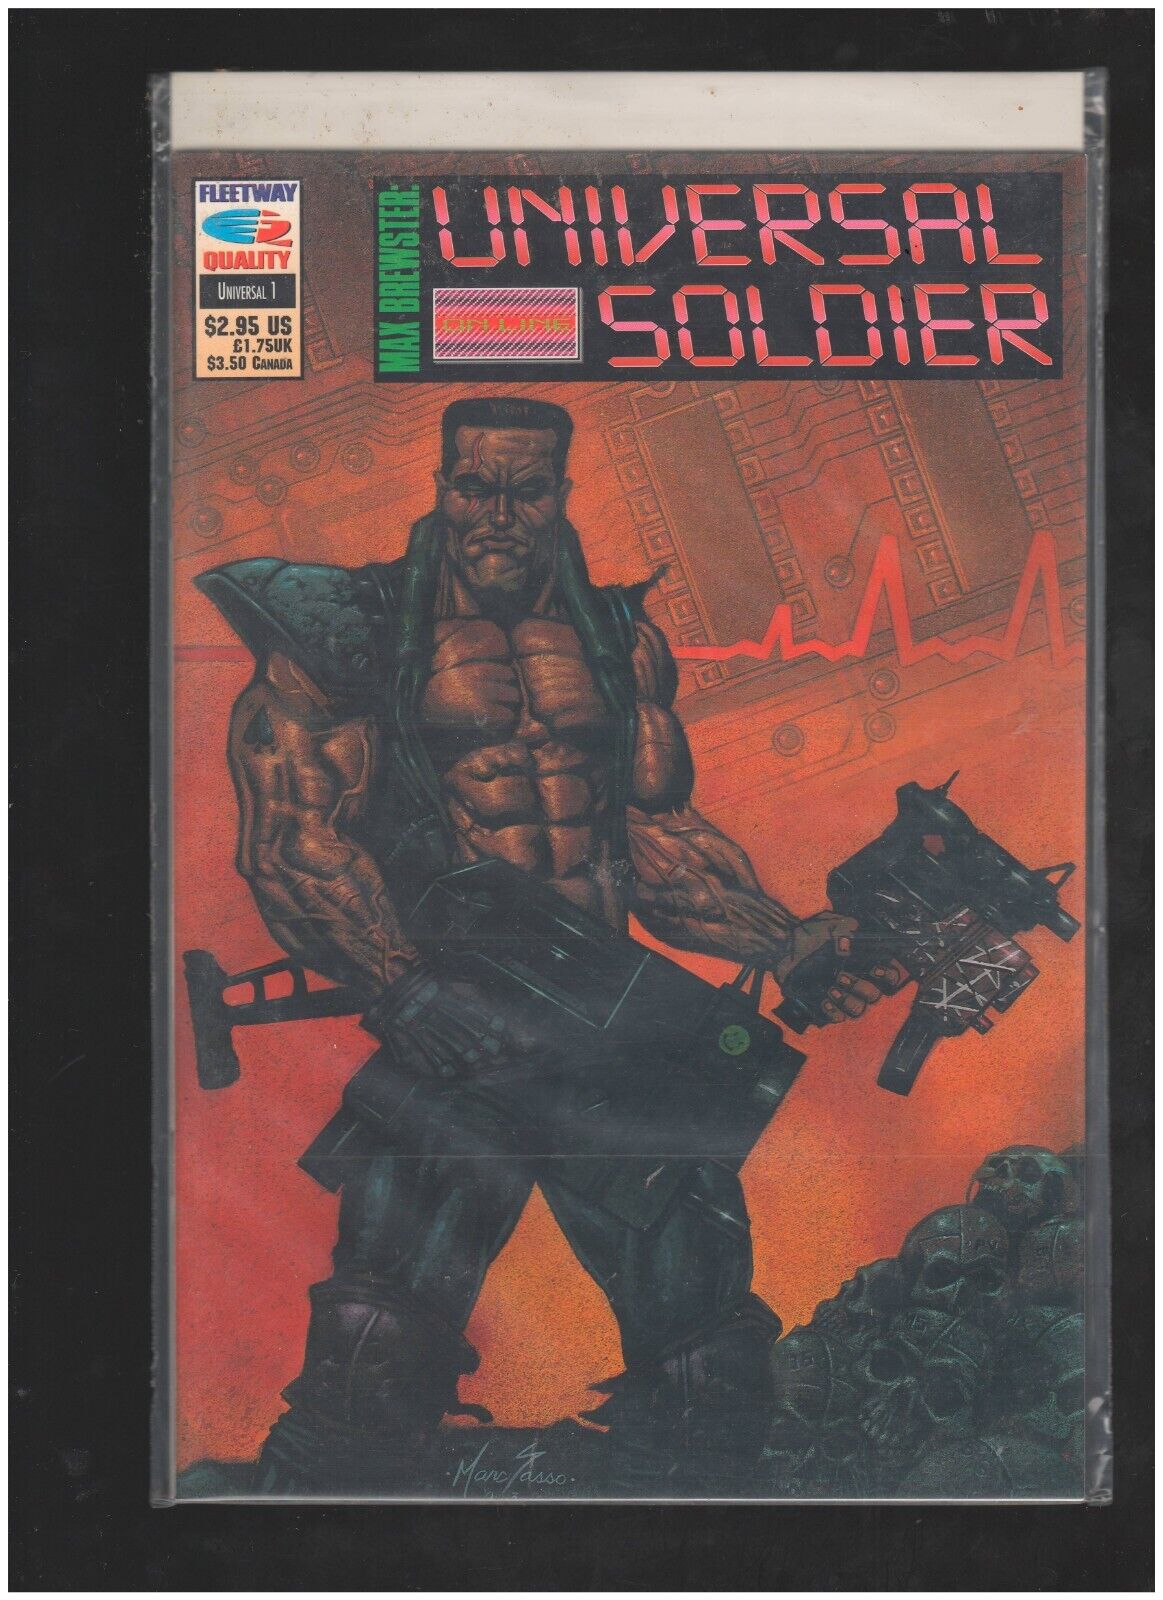 Max Brewster: Universal Soldier Online Volume 1,2, & 3 Fleetway Quality Comics